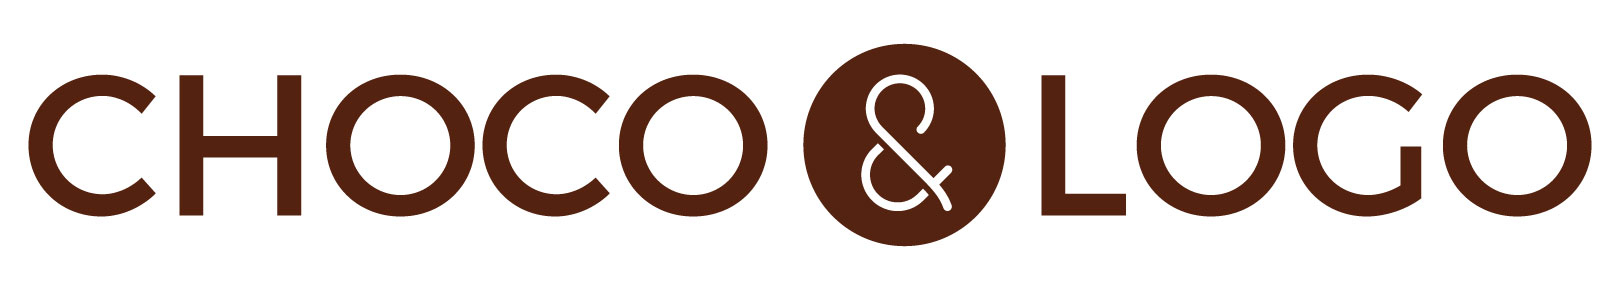 choco & logo